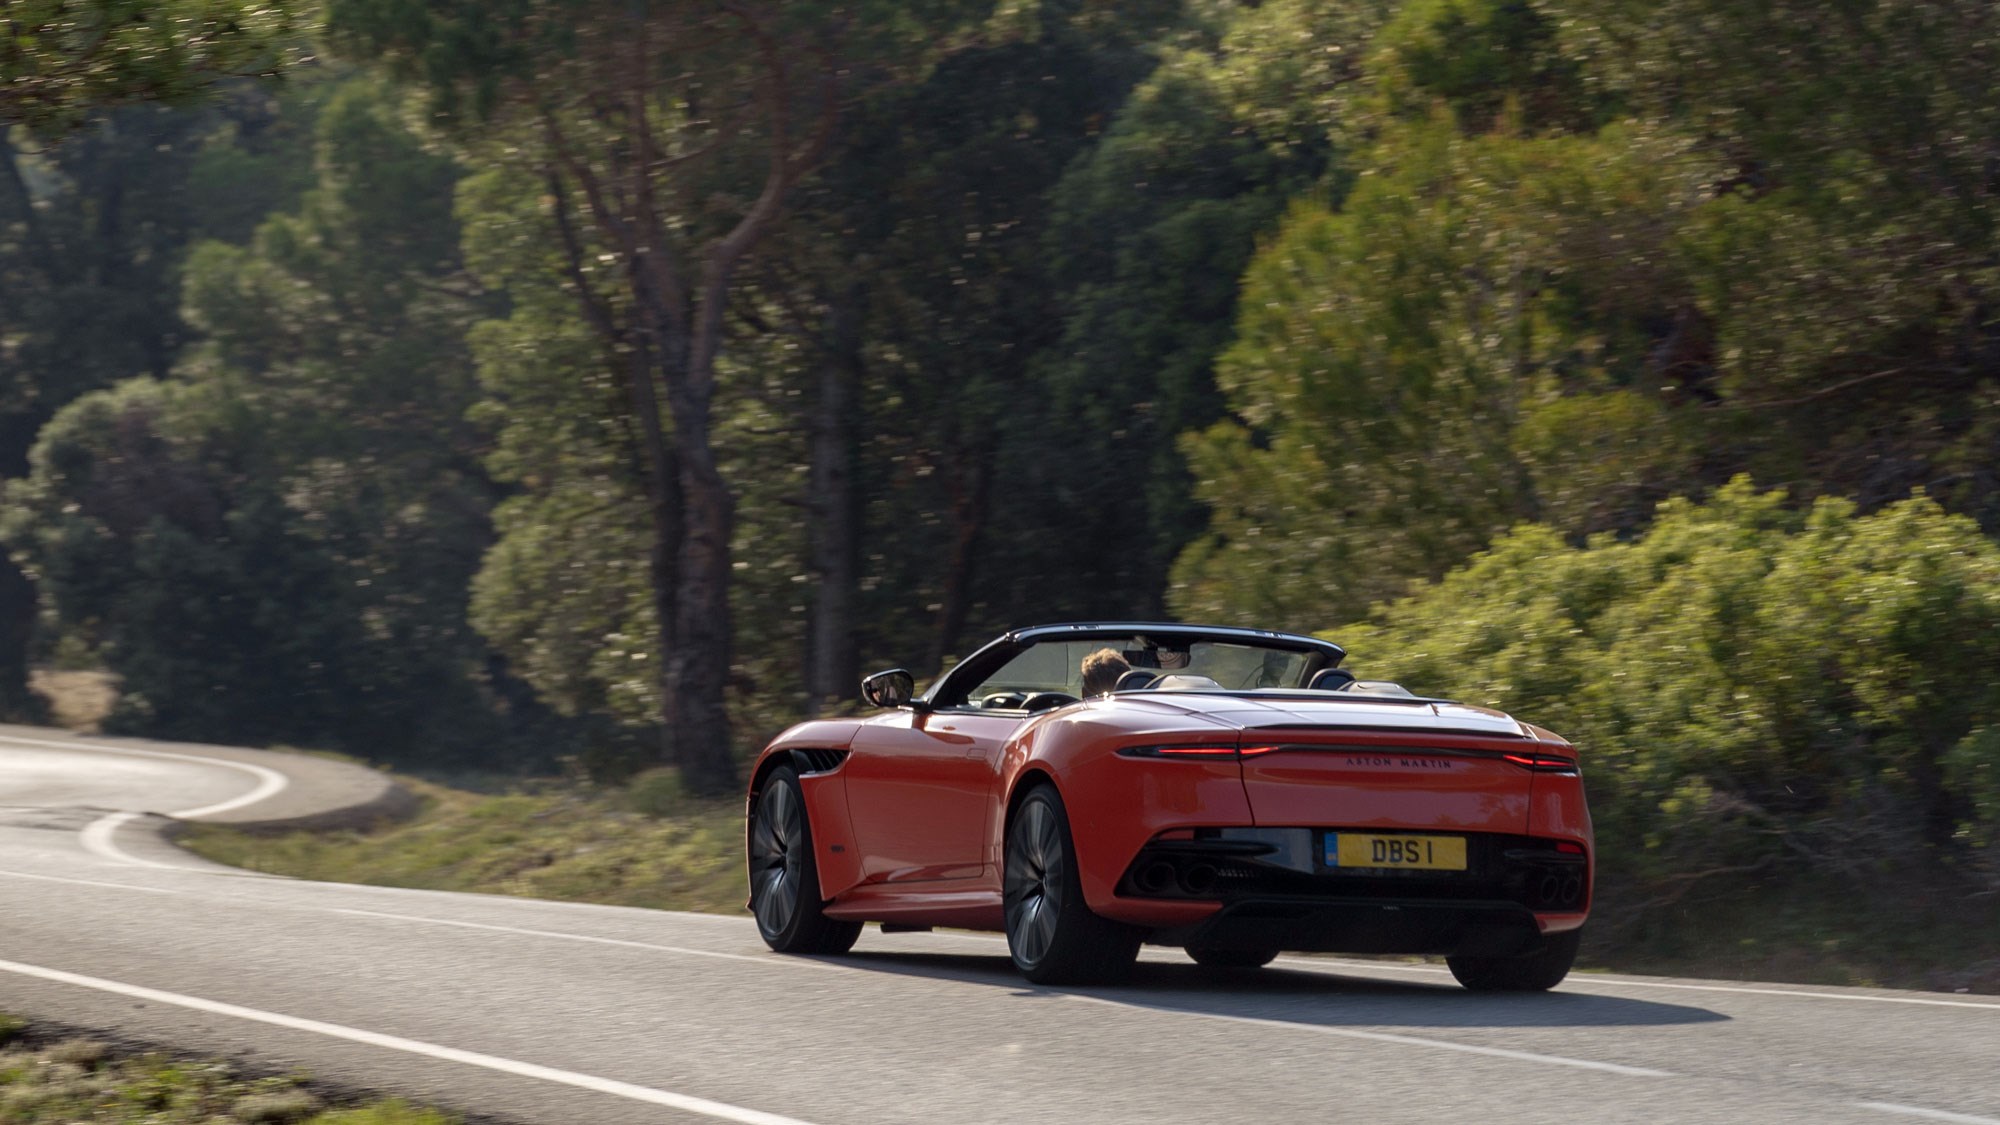 Aston DBS Superleggera rear tracking